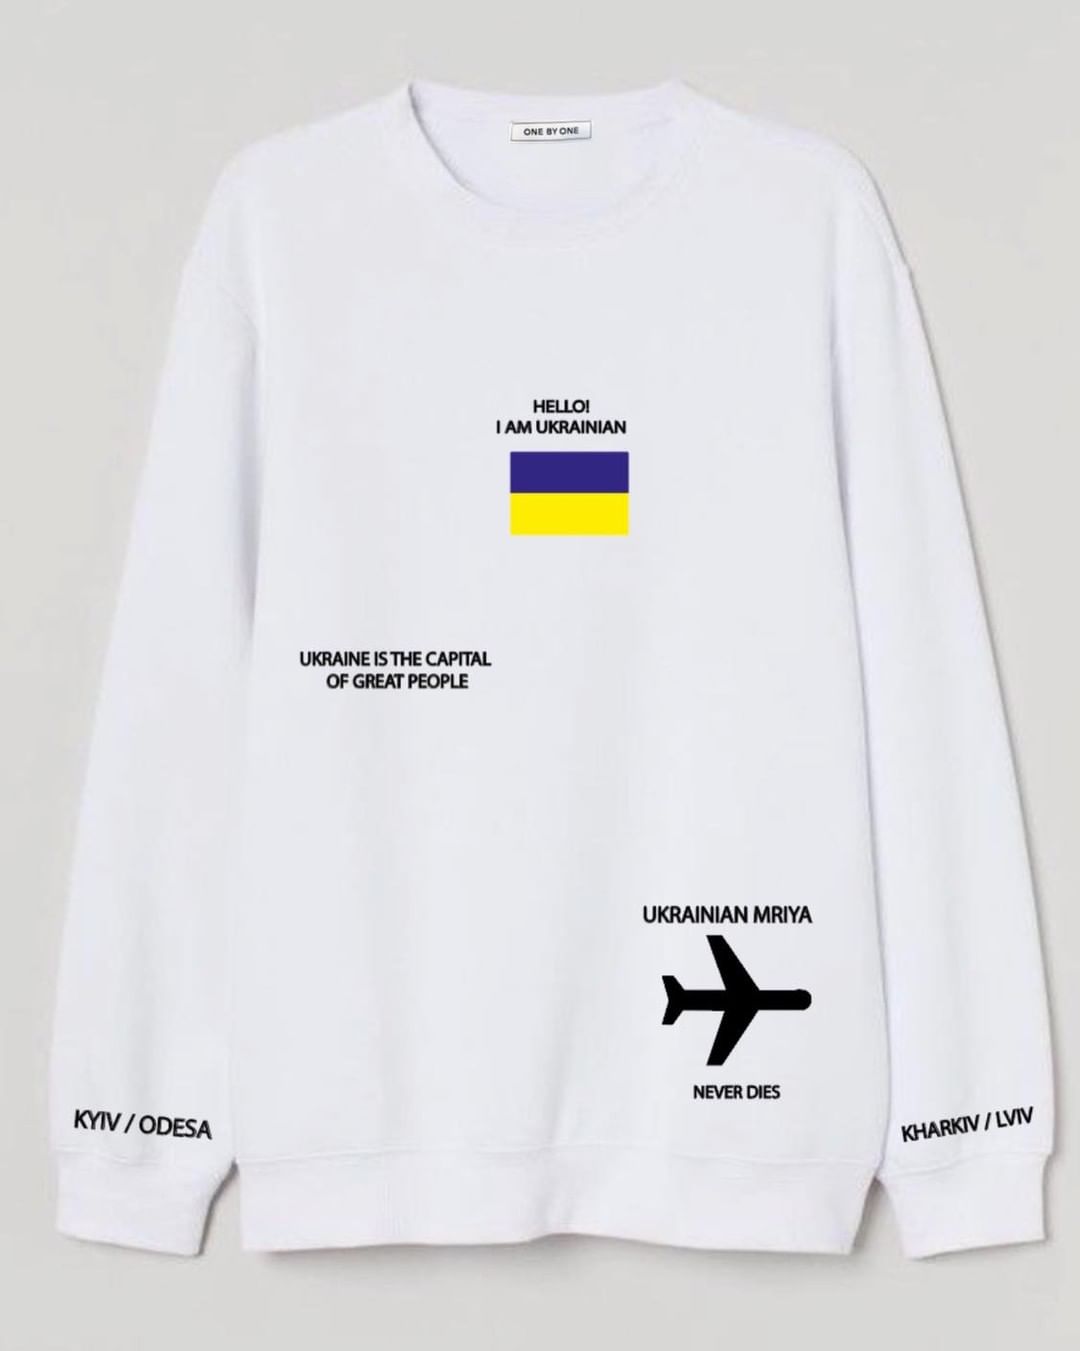 Свитшот из коллекции UKRAINE IS бренда One by One. Фото: Instagram.com/onebyoneua/